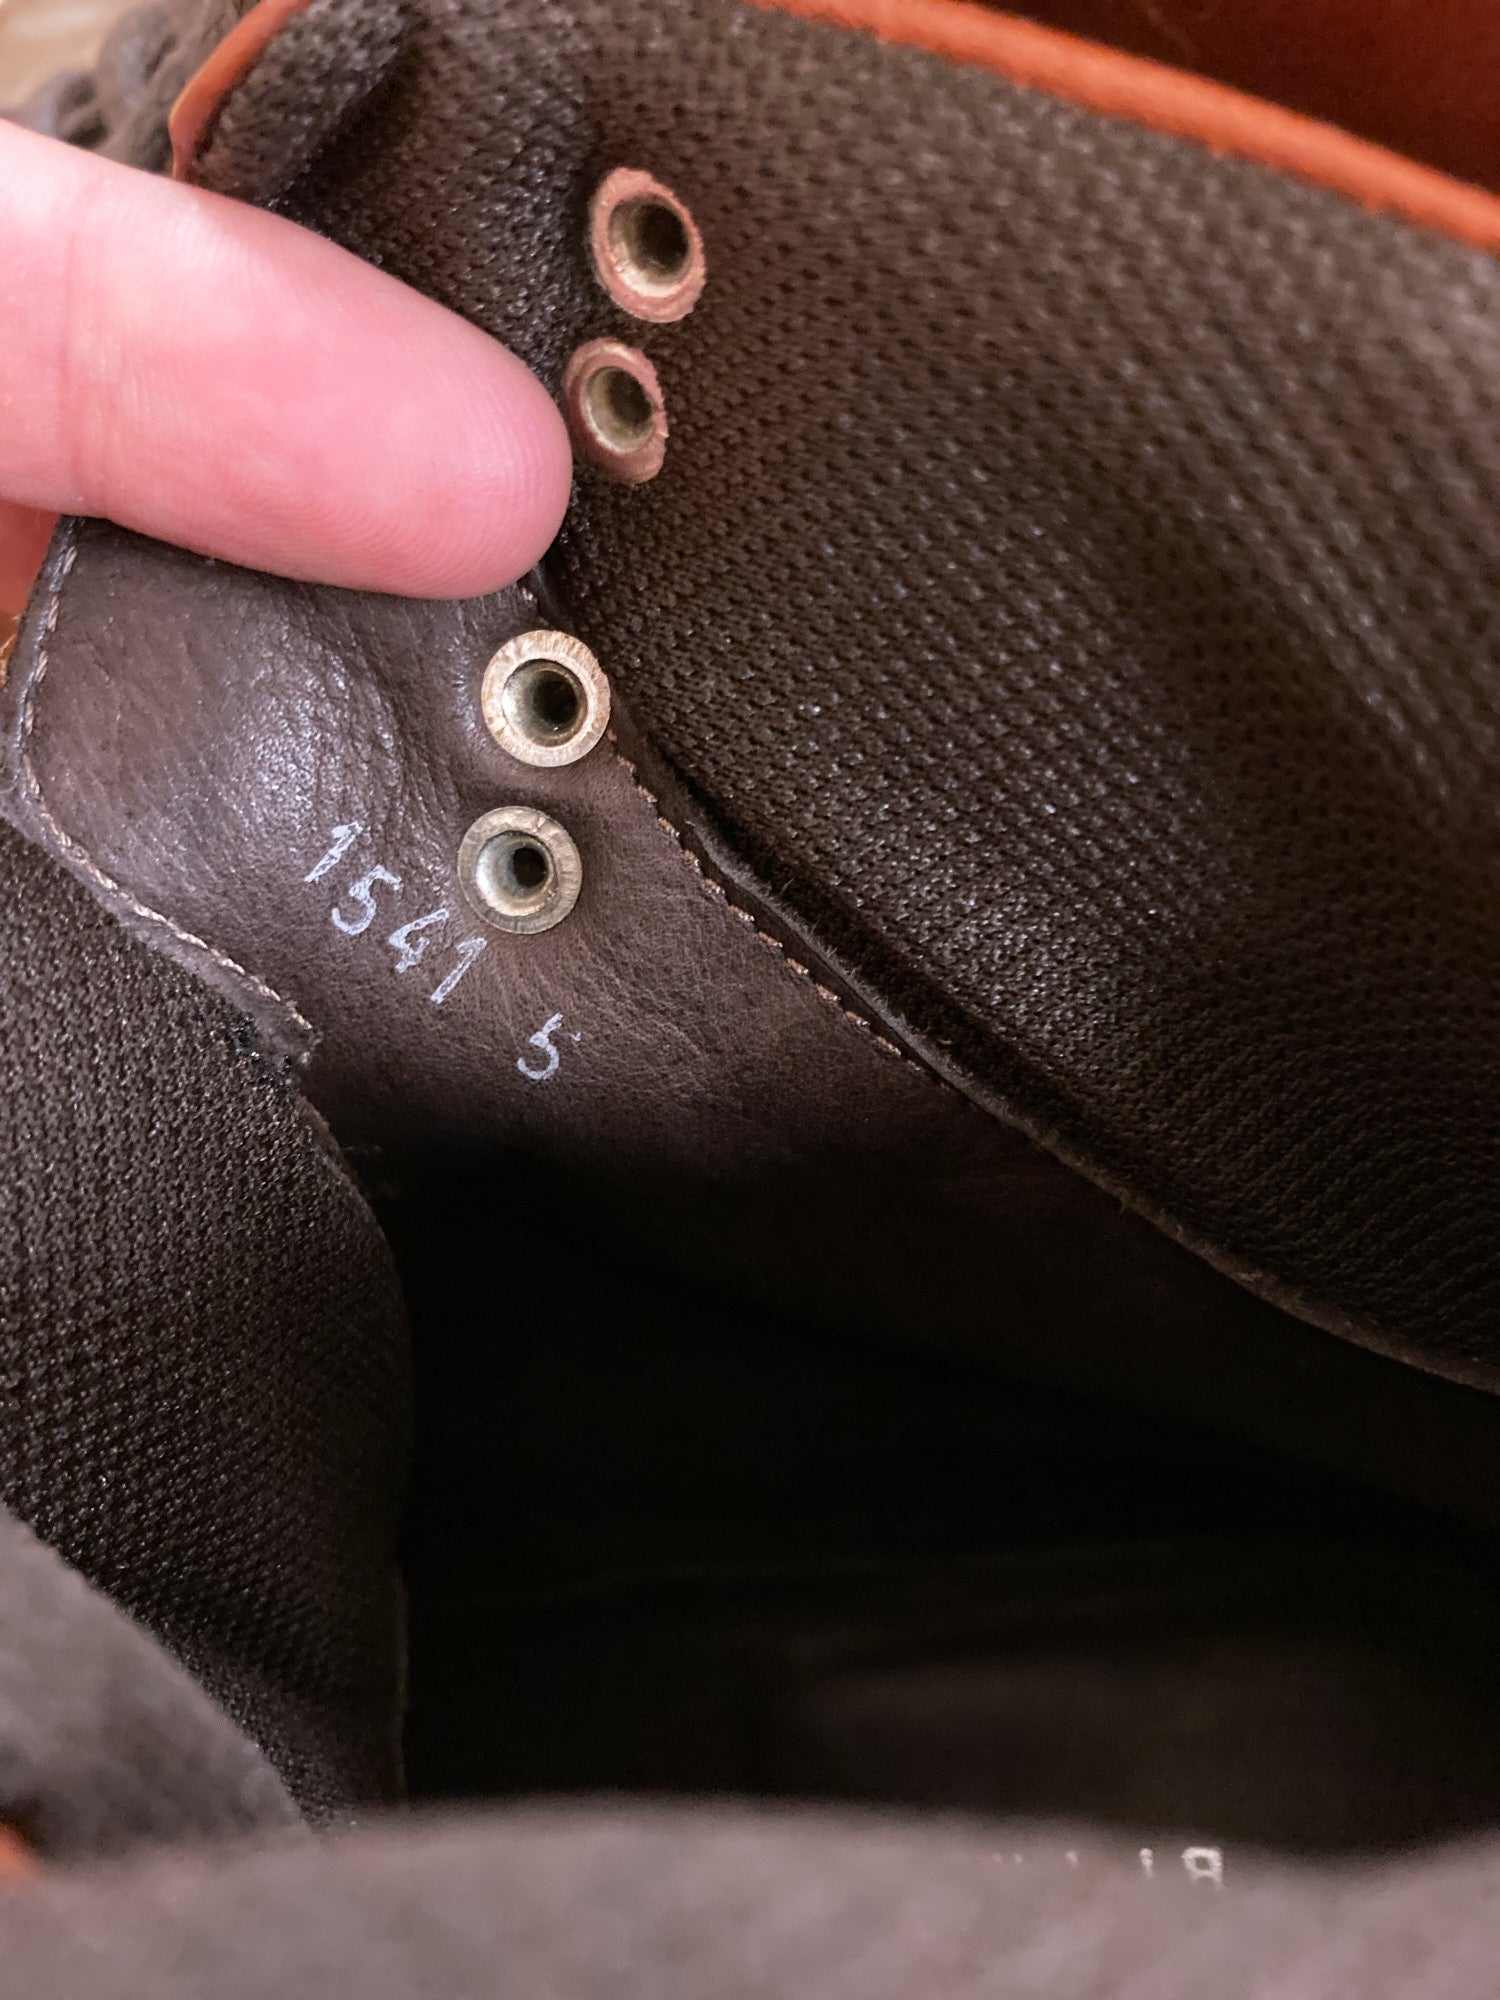 Premiata PR-1 brown leather lace up ankle boots - UK 5 / EU 39